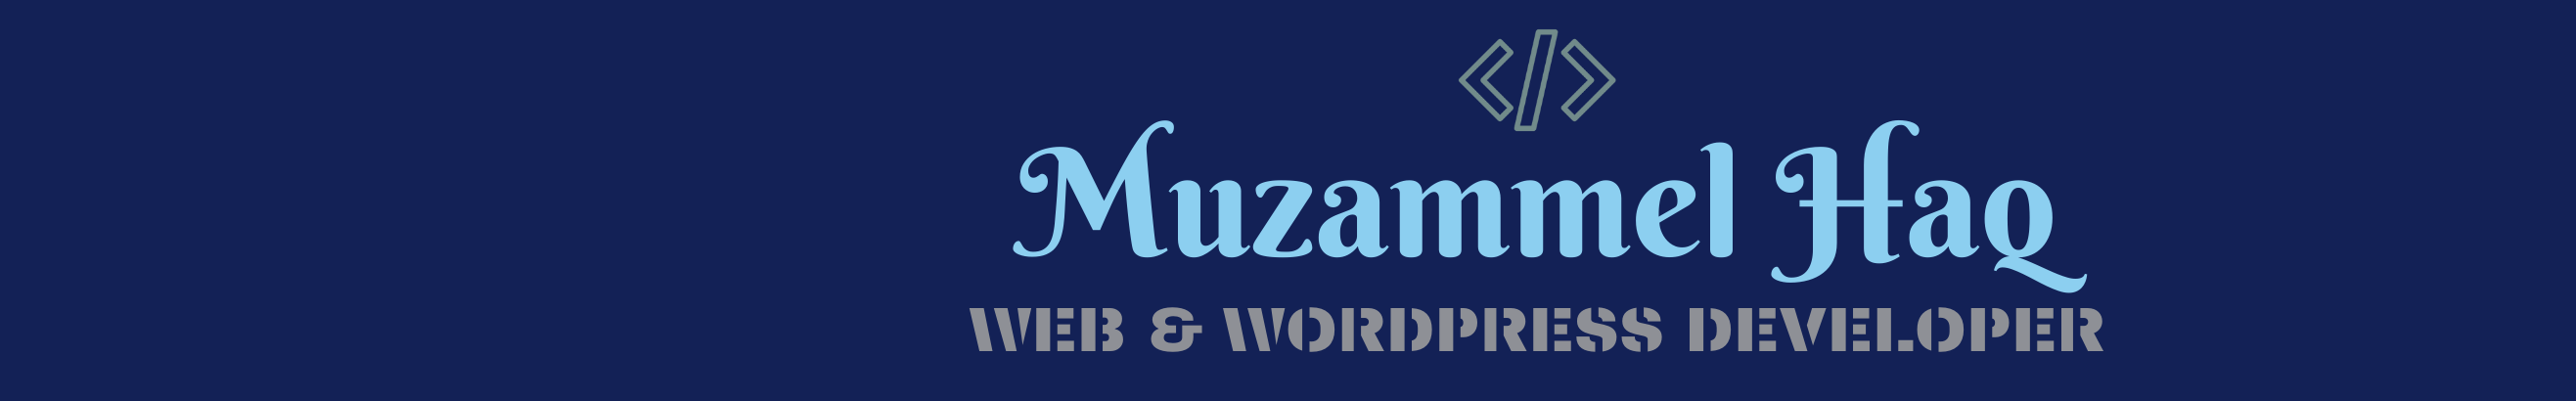 Muzammel Haq's profile banner